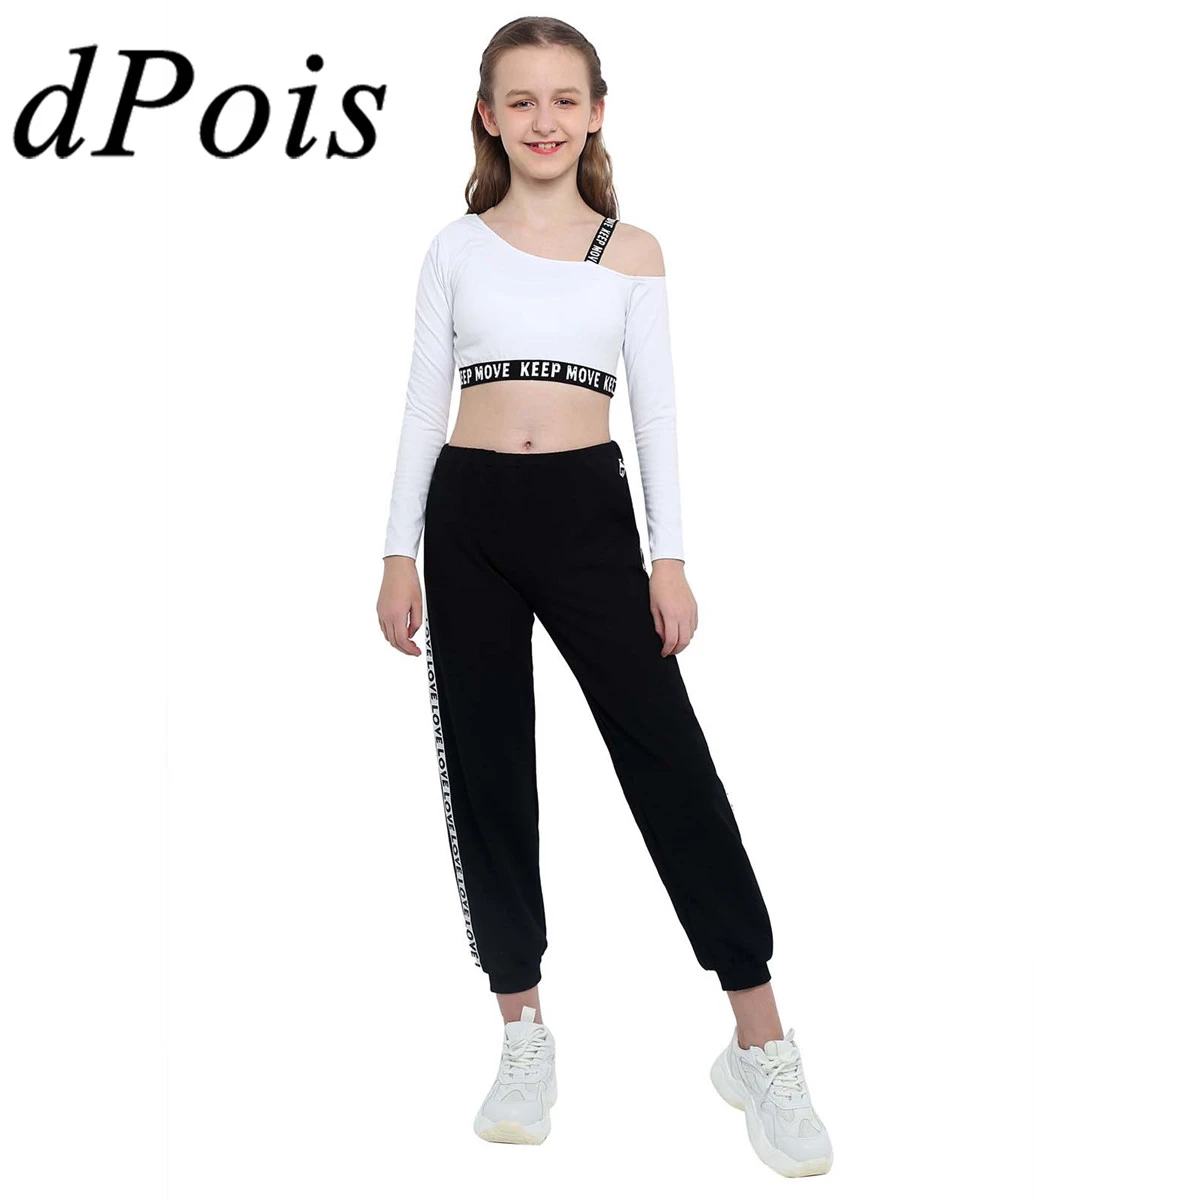 Details about   Girls Kids Gymnastics Outfits Sleeve Crop Tops Yoga Vest Gym Sports Dancewear 